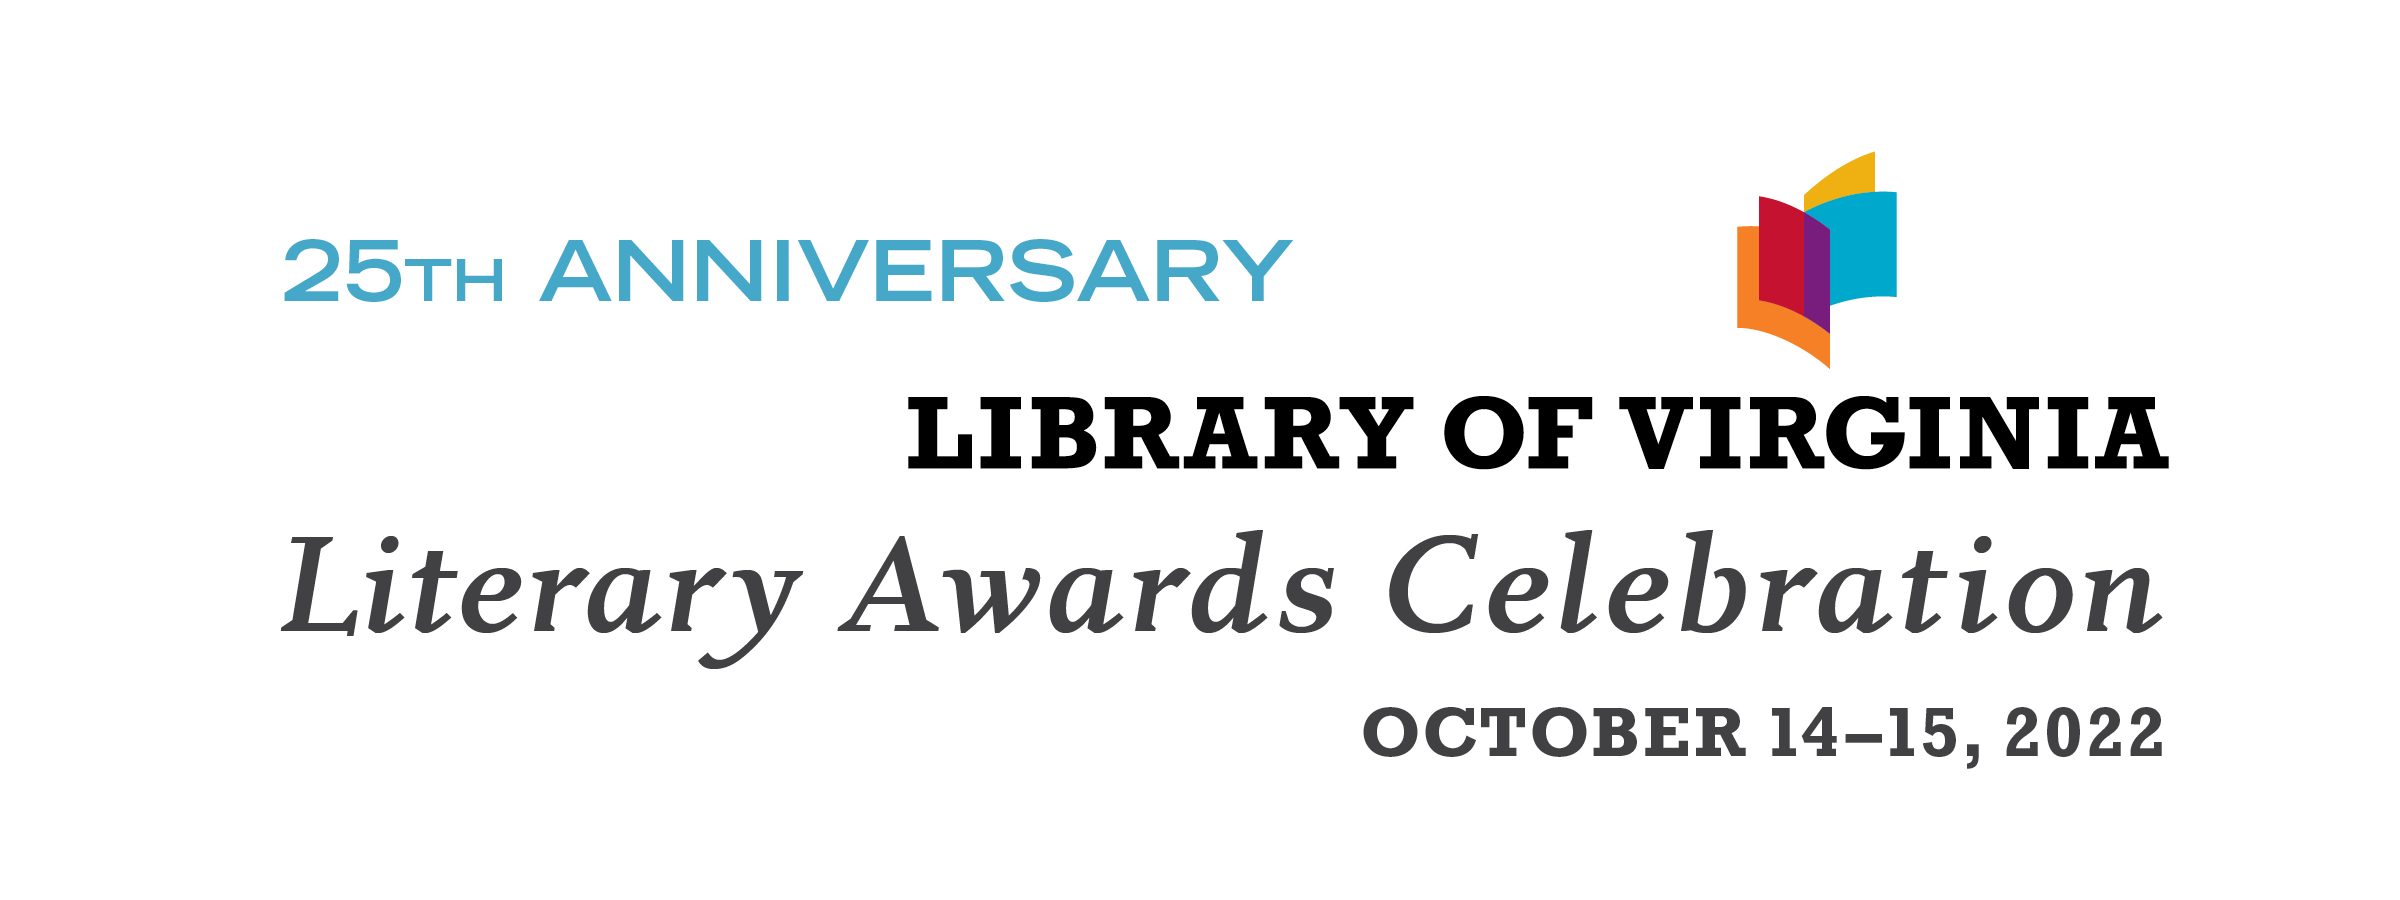 25th Anniversary Library of Virginia Literary awards Celebration October 14-15, 2022